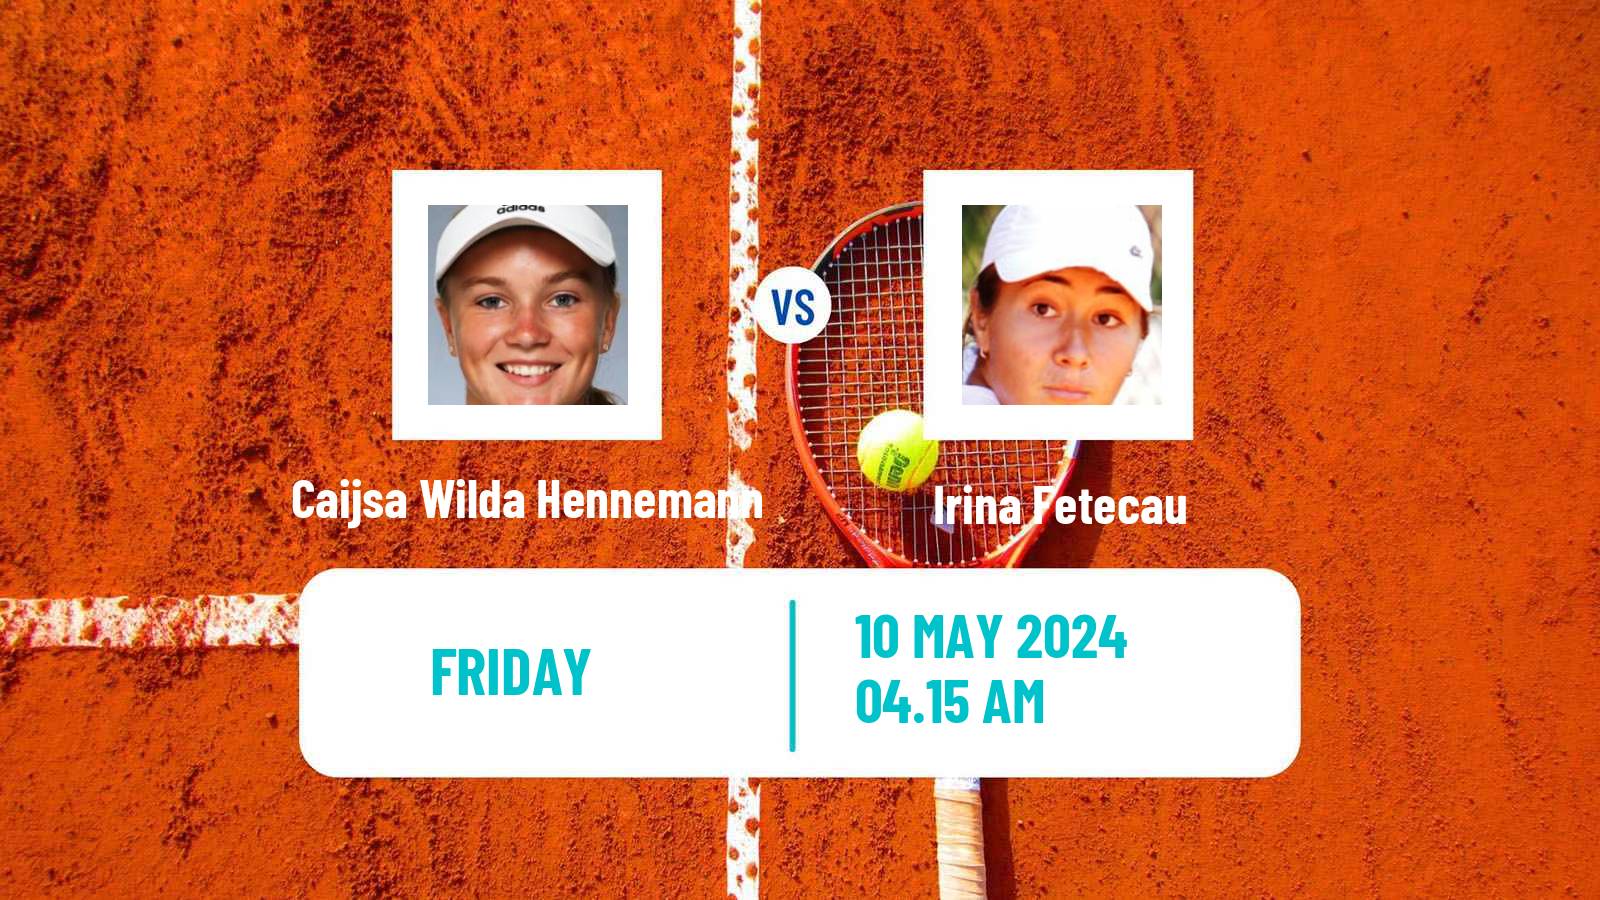 Tennis ITF W35 Bastad Women Caijsa Wilda Hennemann - Irina Fetecau